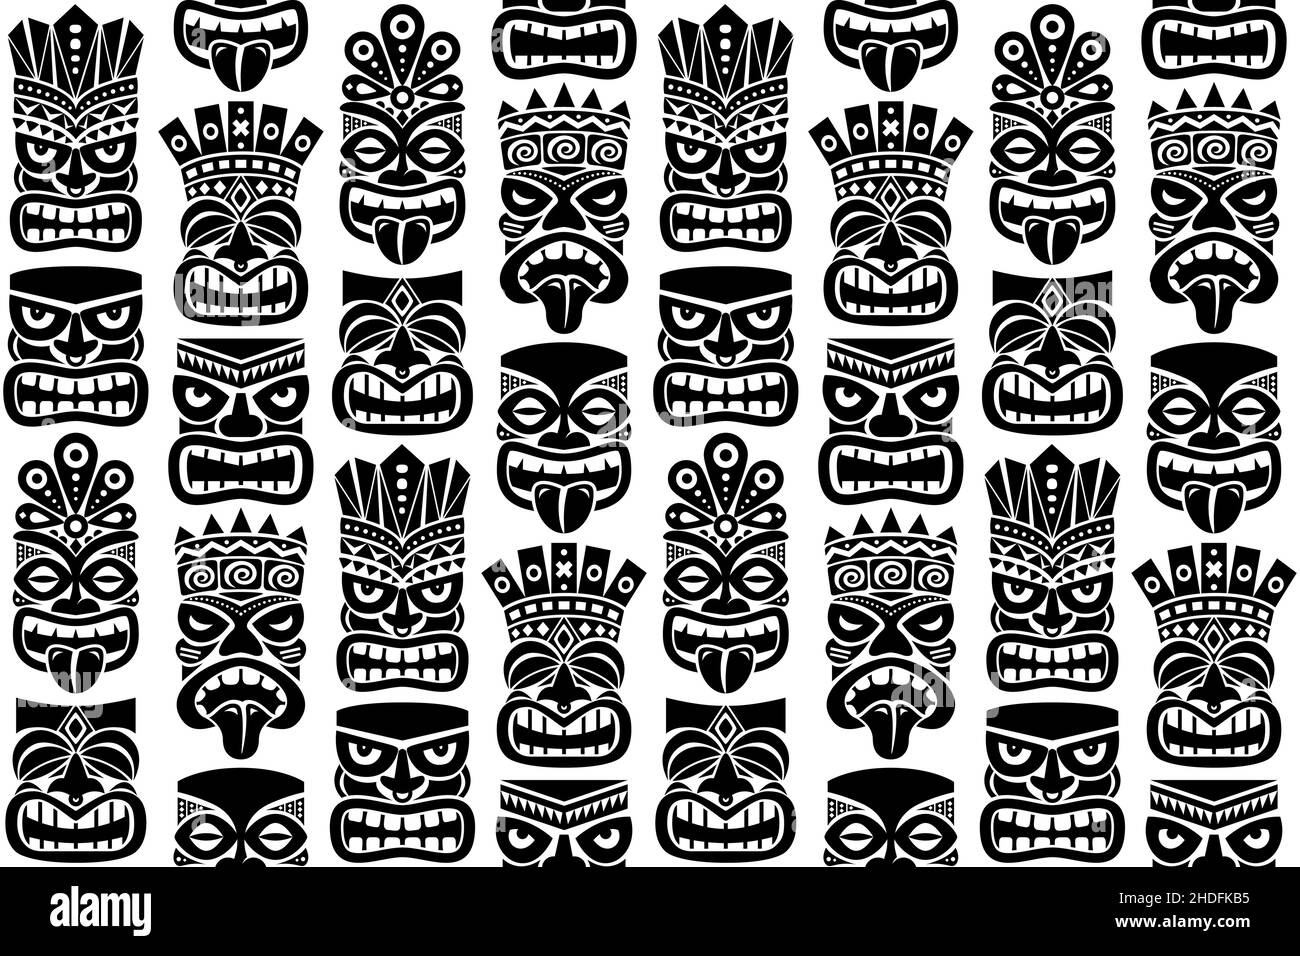 Tiki Pol Totem Vektor nahtlose Muster - traditionelle Statue oder Maske repetitve Design aus Polynesien und Hawaii Stock Vektor